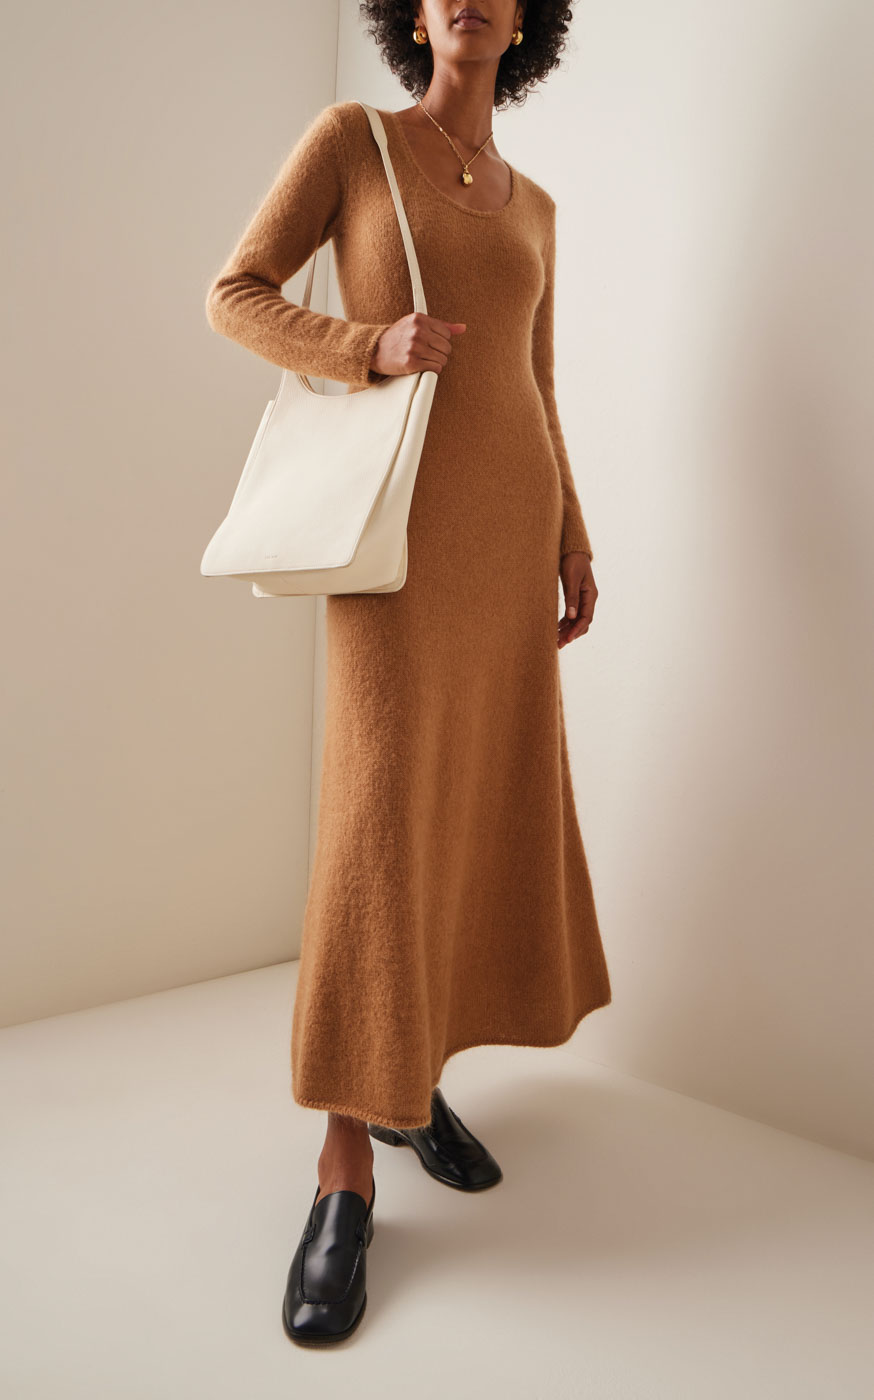 28 Giuliva Heritage Susanna Mohair Blend Midi Dress $1,225 Net A Porter.com